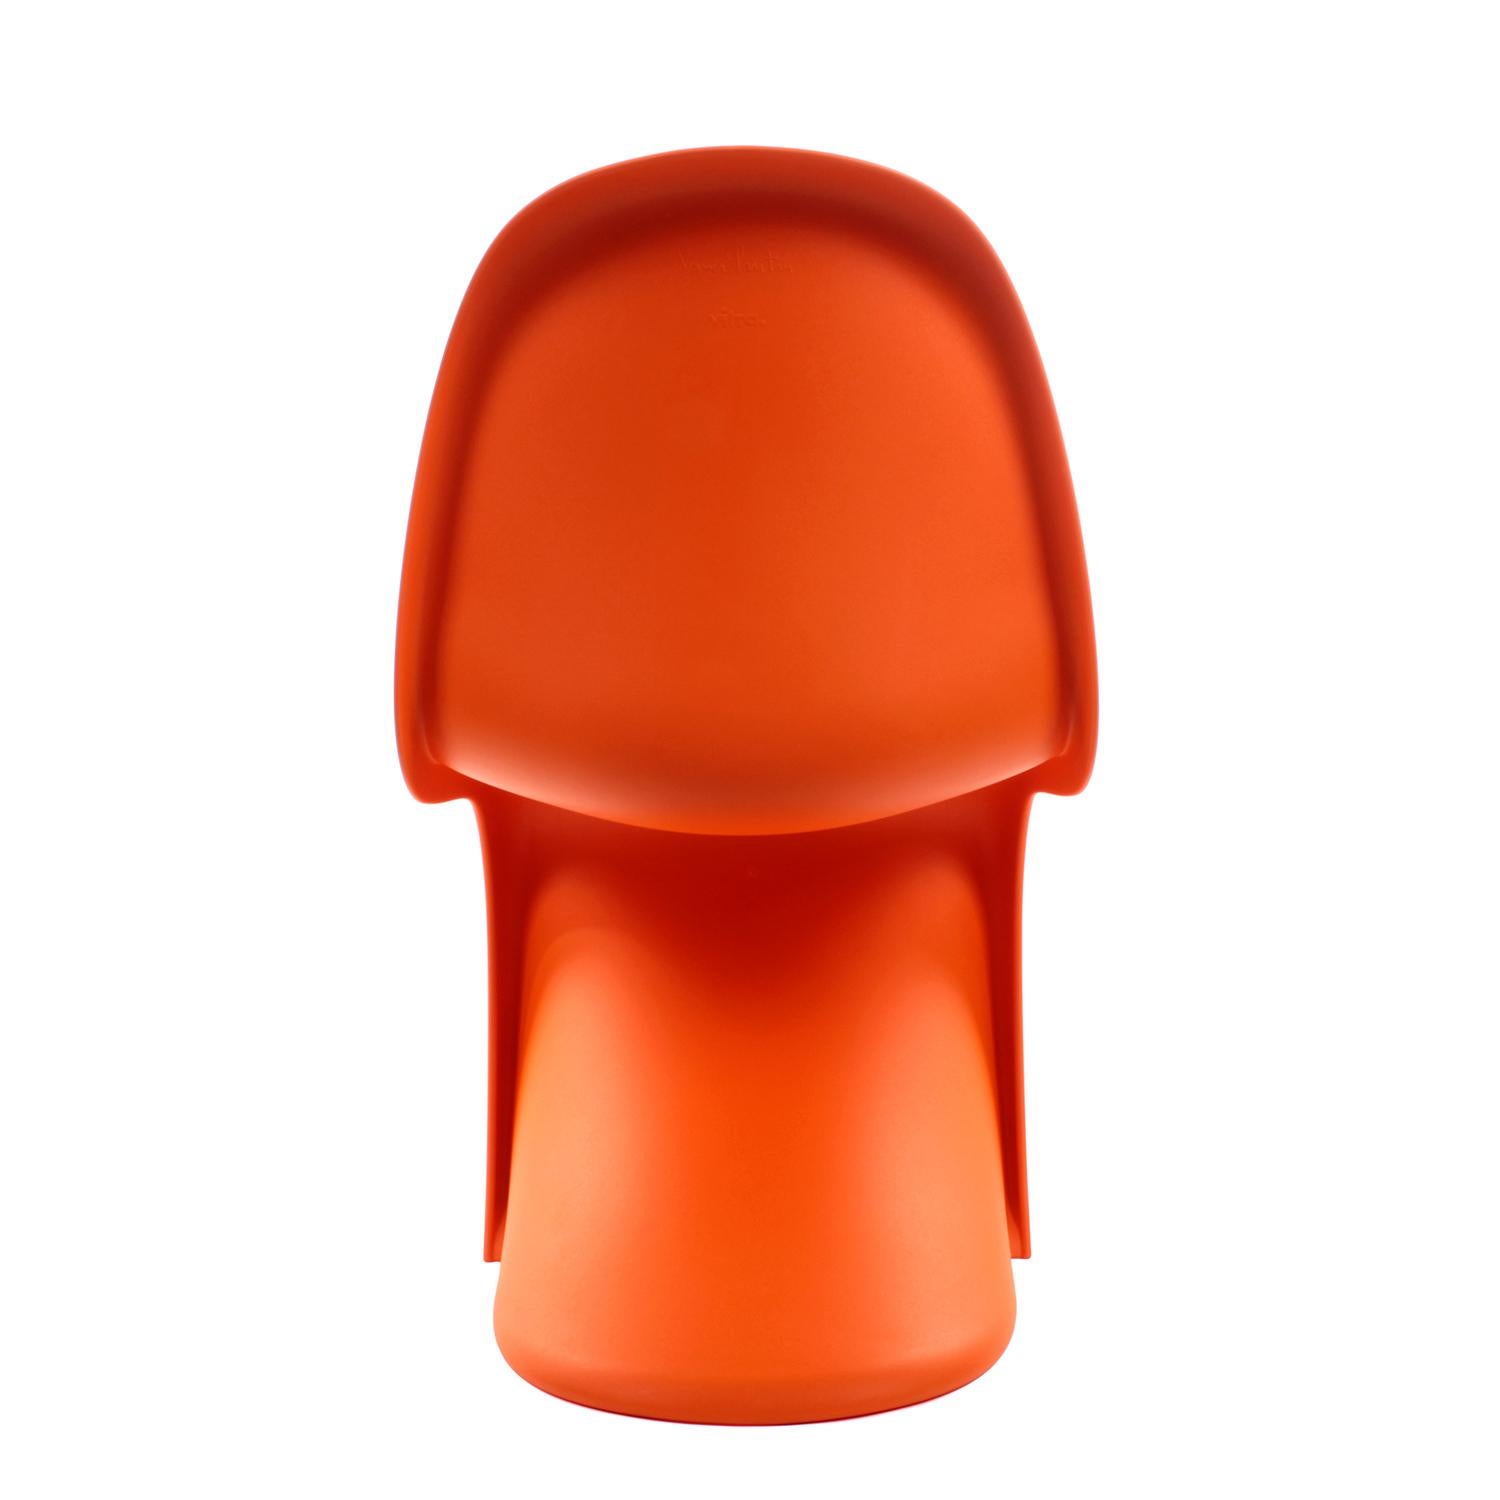 Scandinavian Modern Panton Junior Chair by Verner Panton Vitra 1967, Bright Orange Children's Chair For Sale